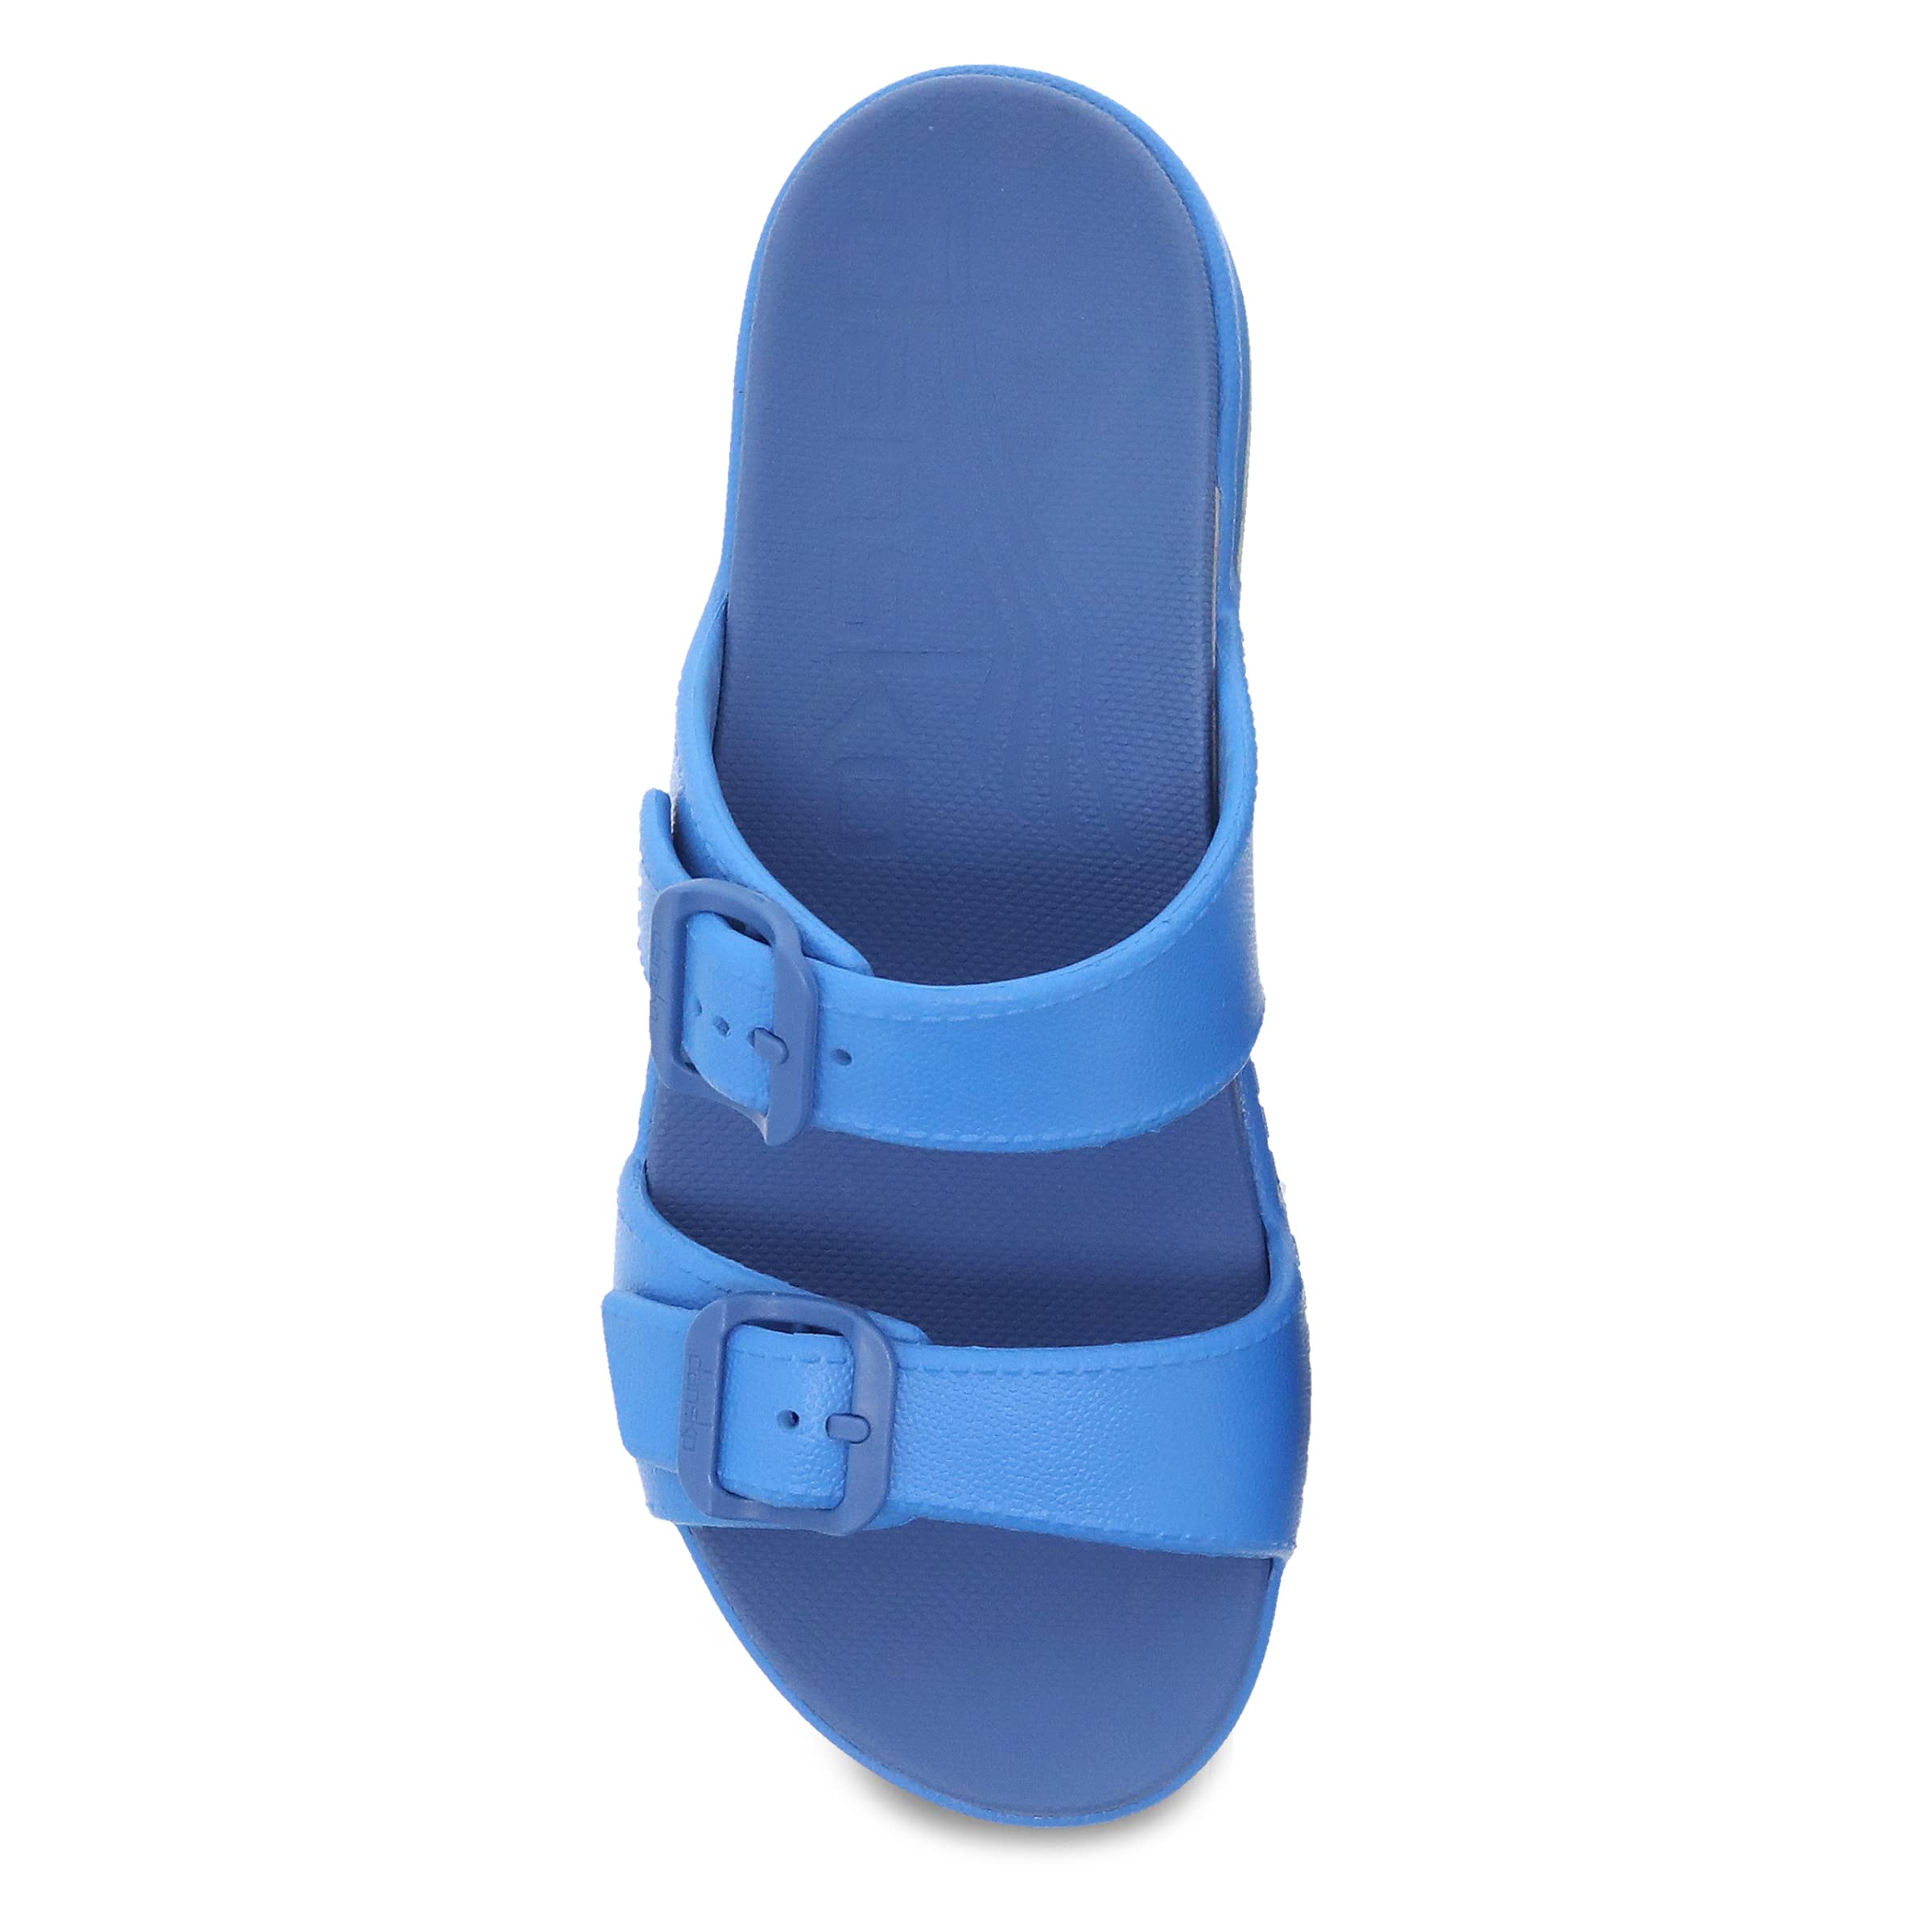 Dansko Women's Kandi Slip On Sandals - Lightweight and Cushion Comfort with Arch Support